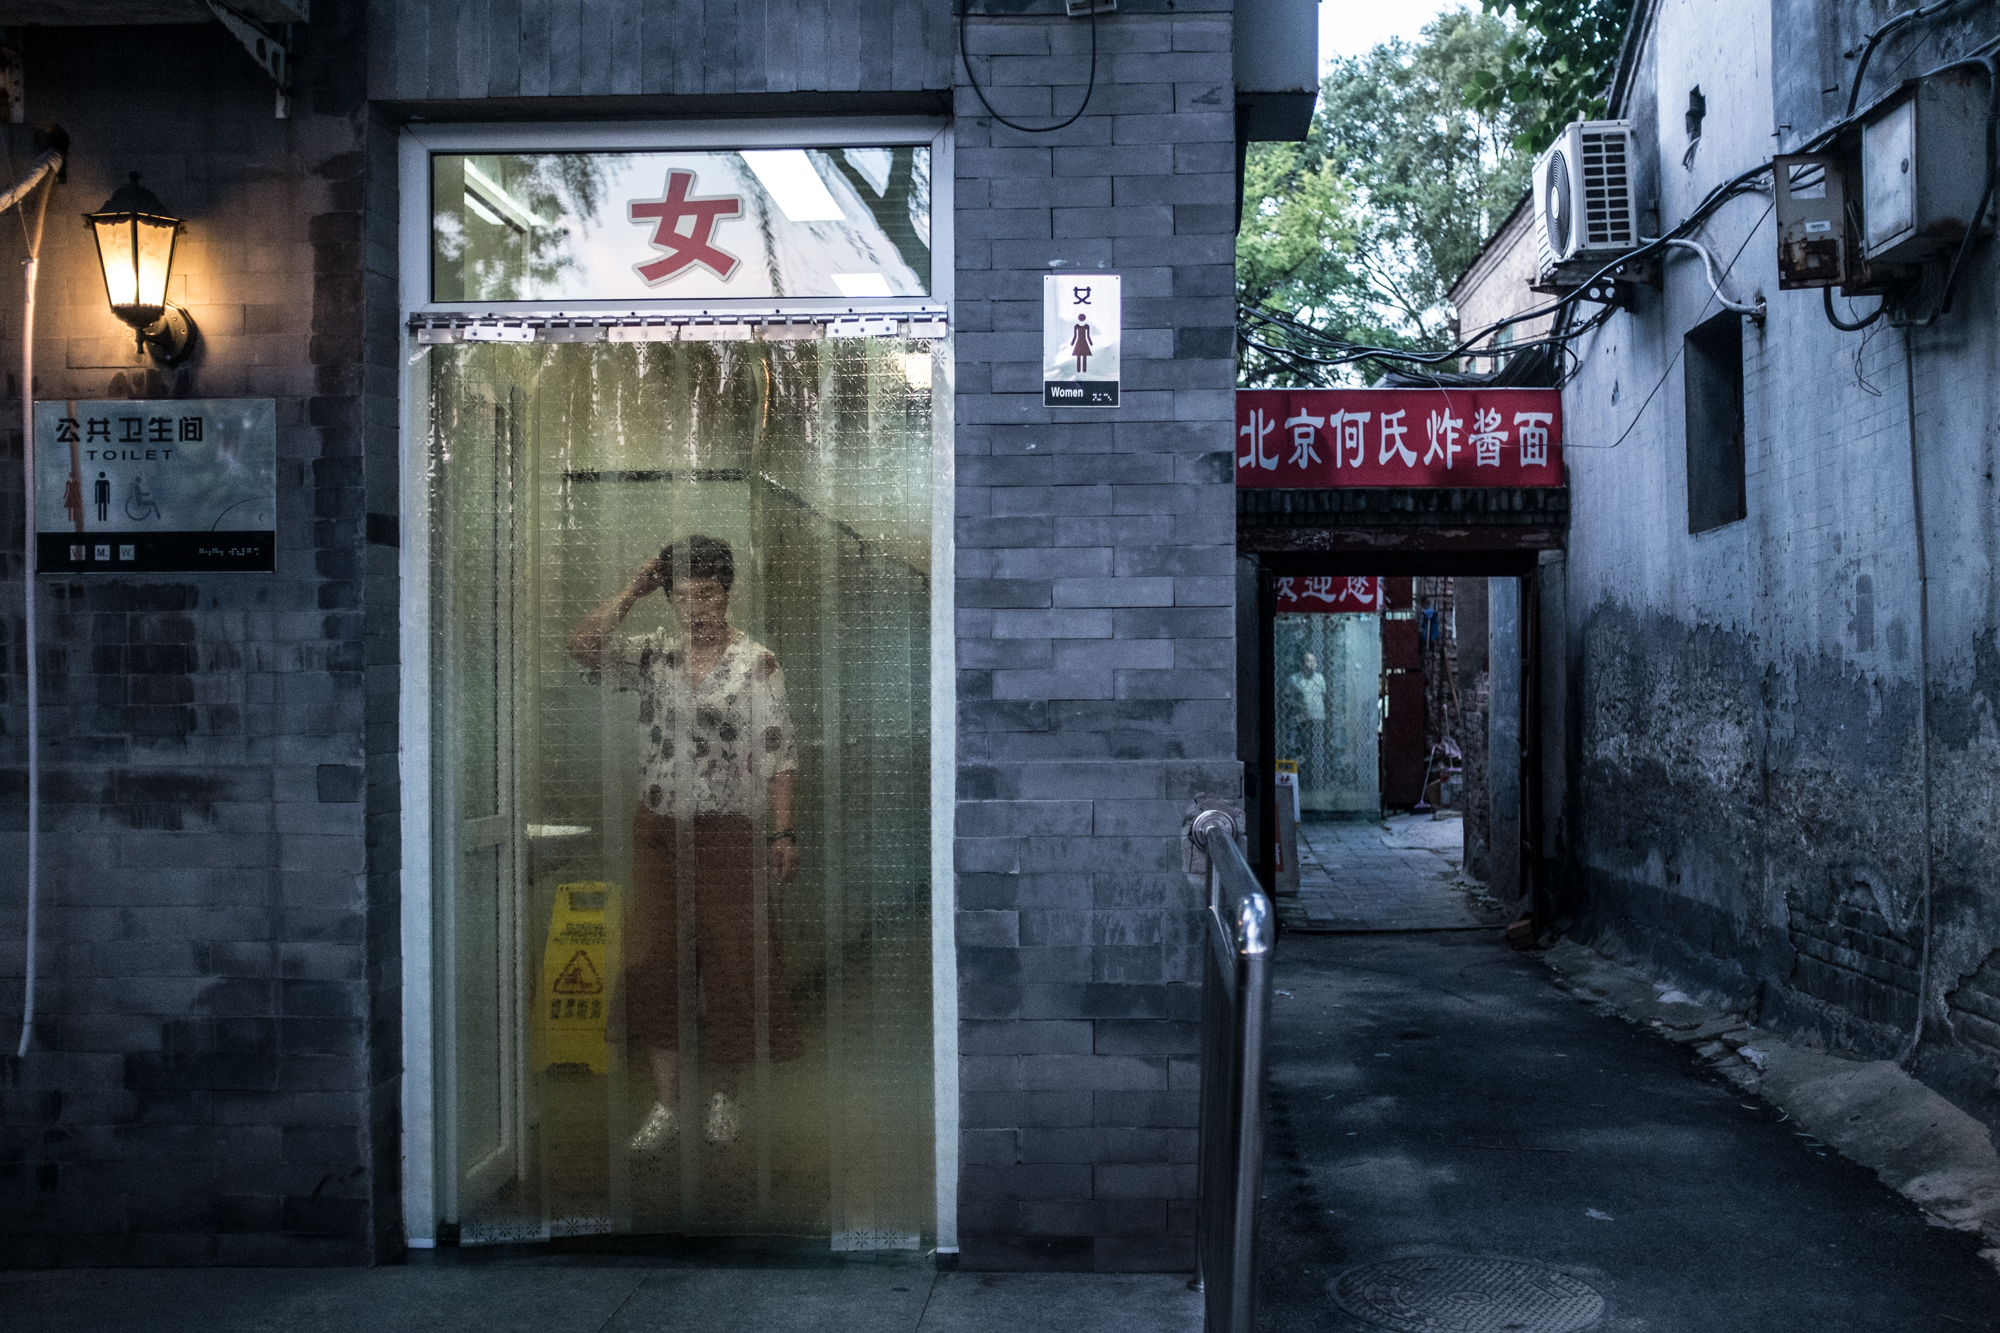  Public toilets in the Shichahai area, Beijing, August 2017 